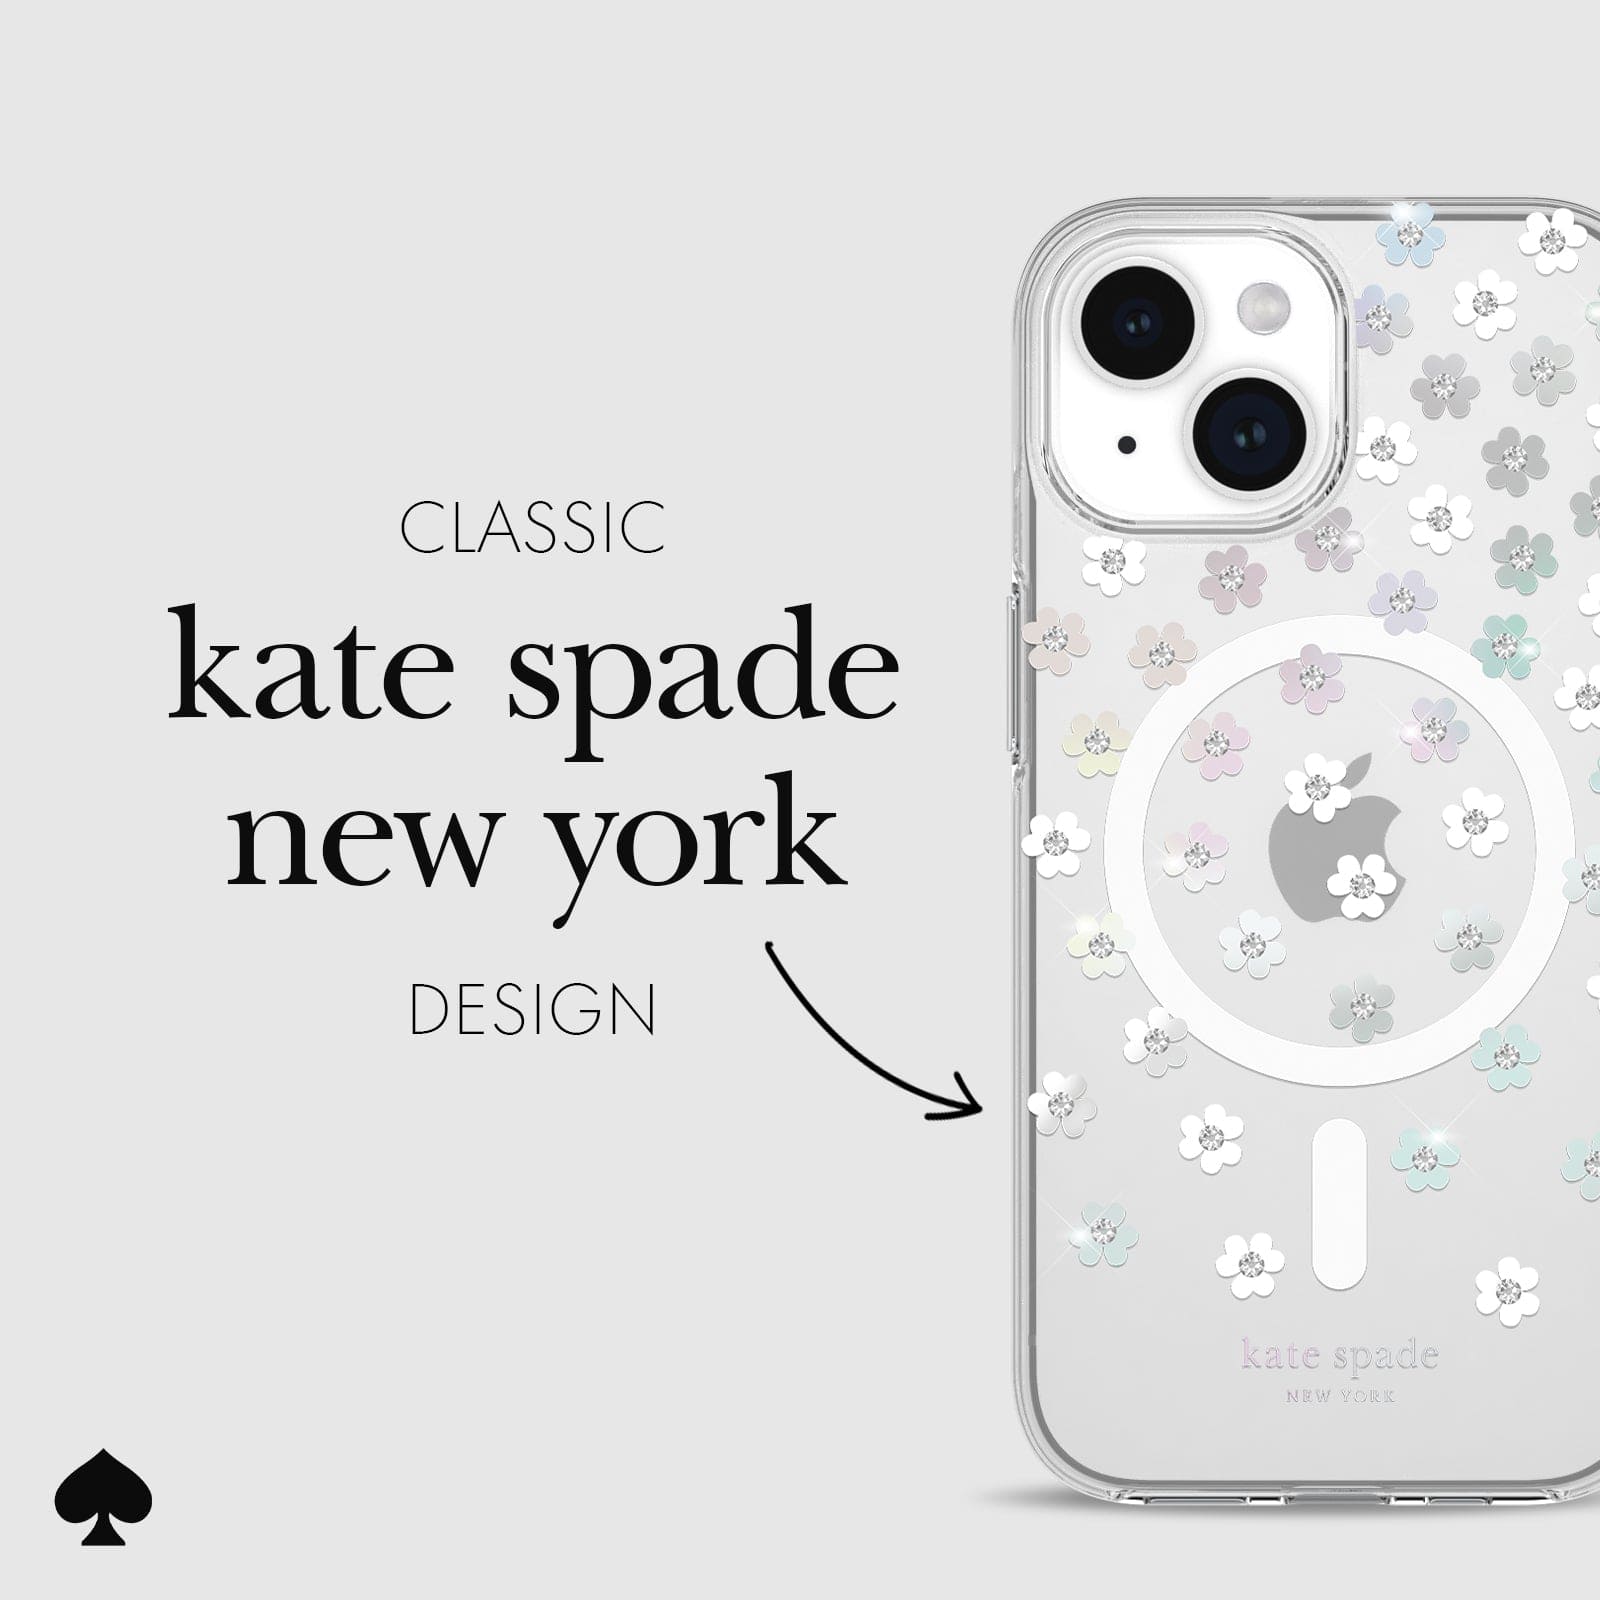 CLASSIC KATE SPADE NEW YORK DESIGN